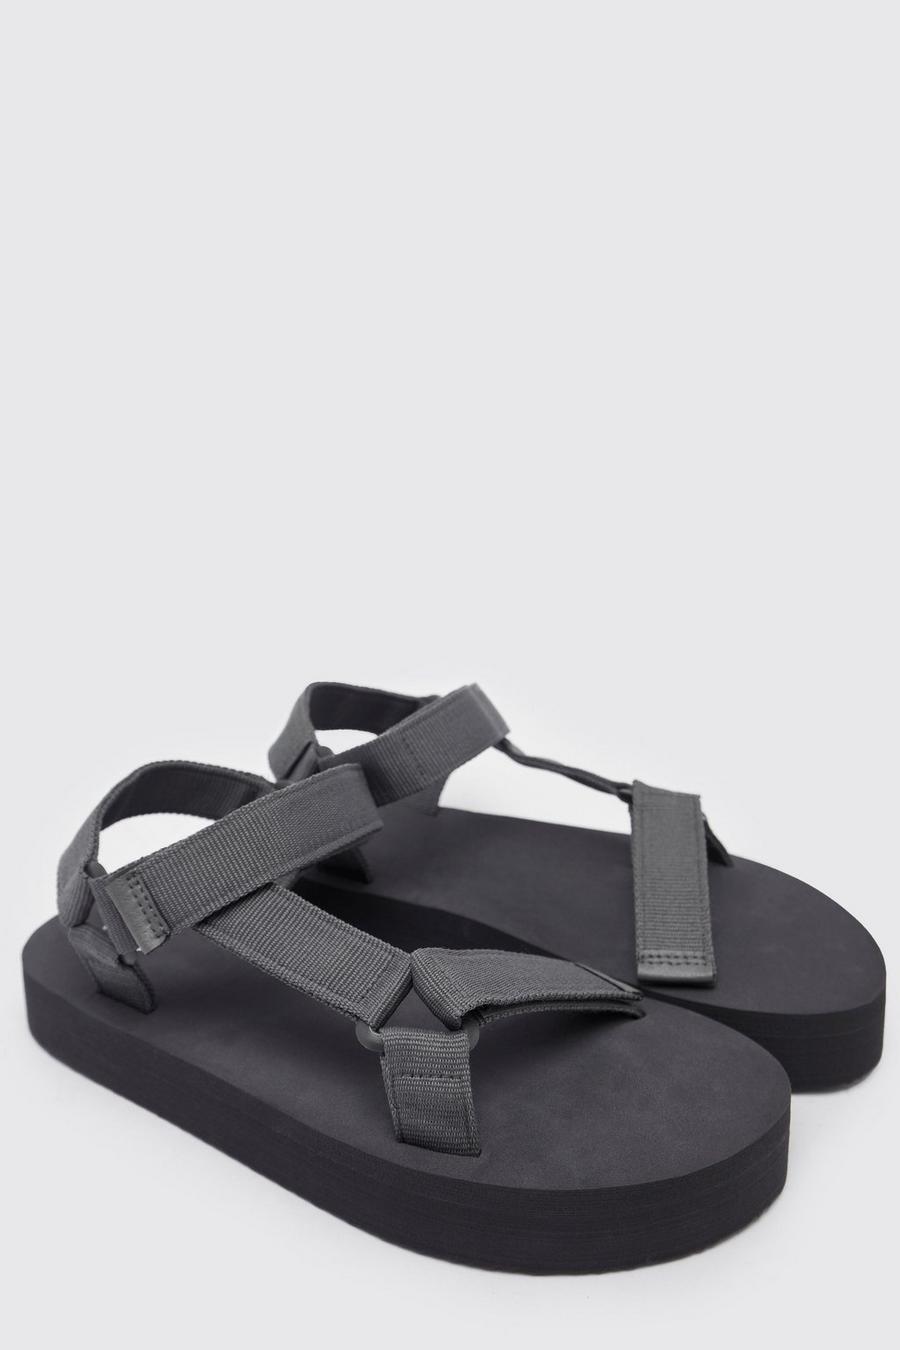 Charcoal grey Technical Sandal